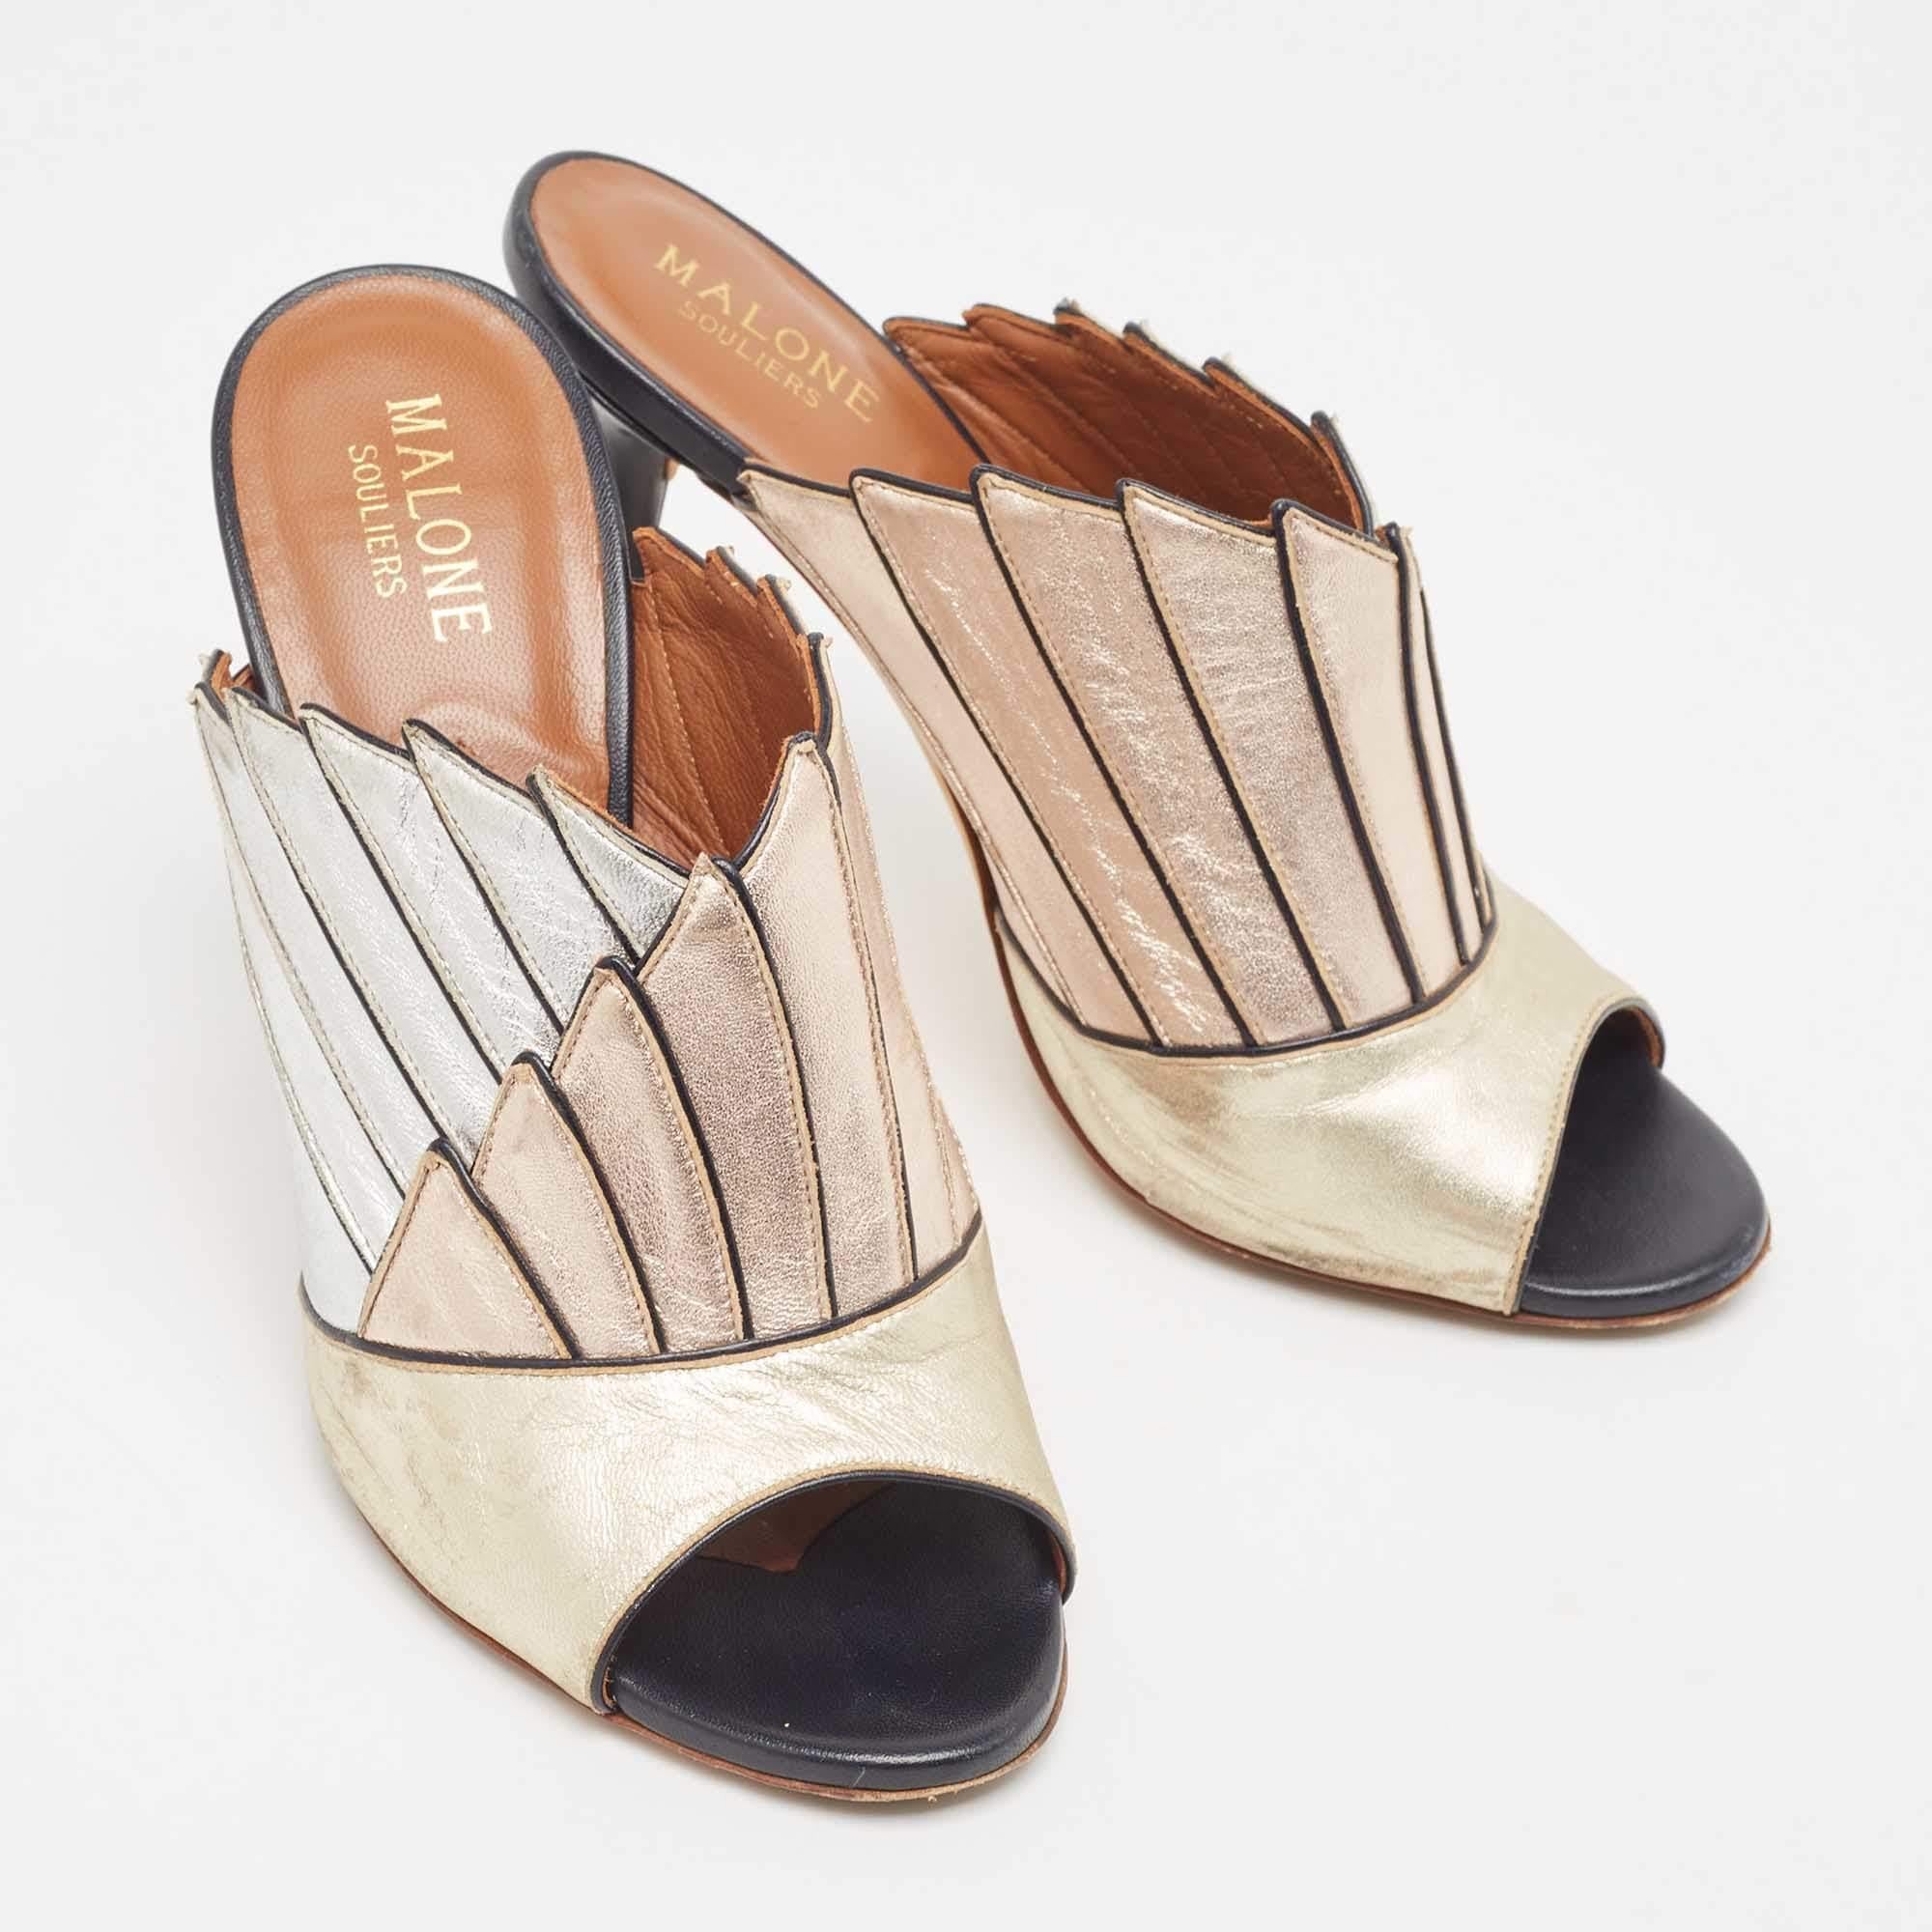 Malone Souliers Tricolor Leather Donna Slide Sandals Size 37 In Good Condition For Sale In Dubai, Al Qouz 2